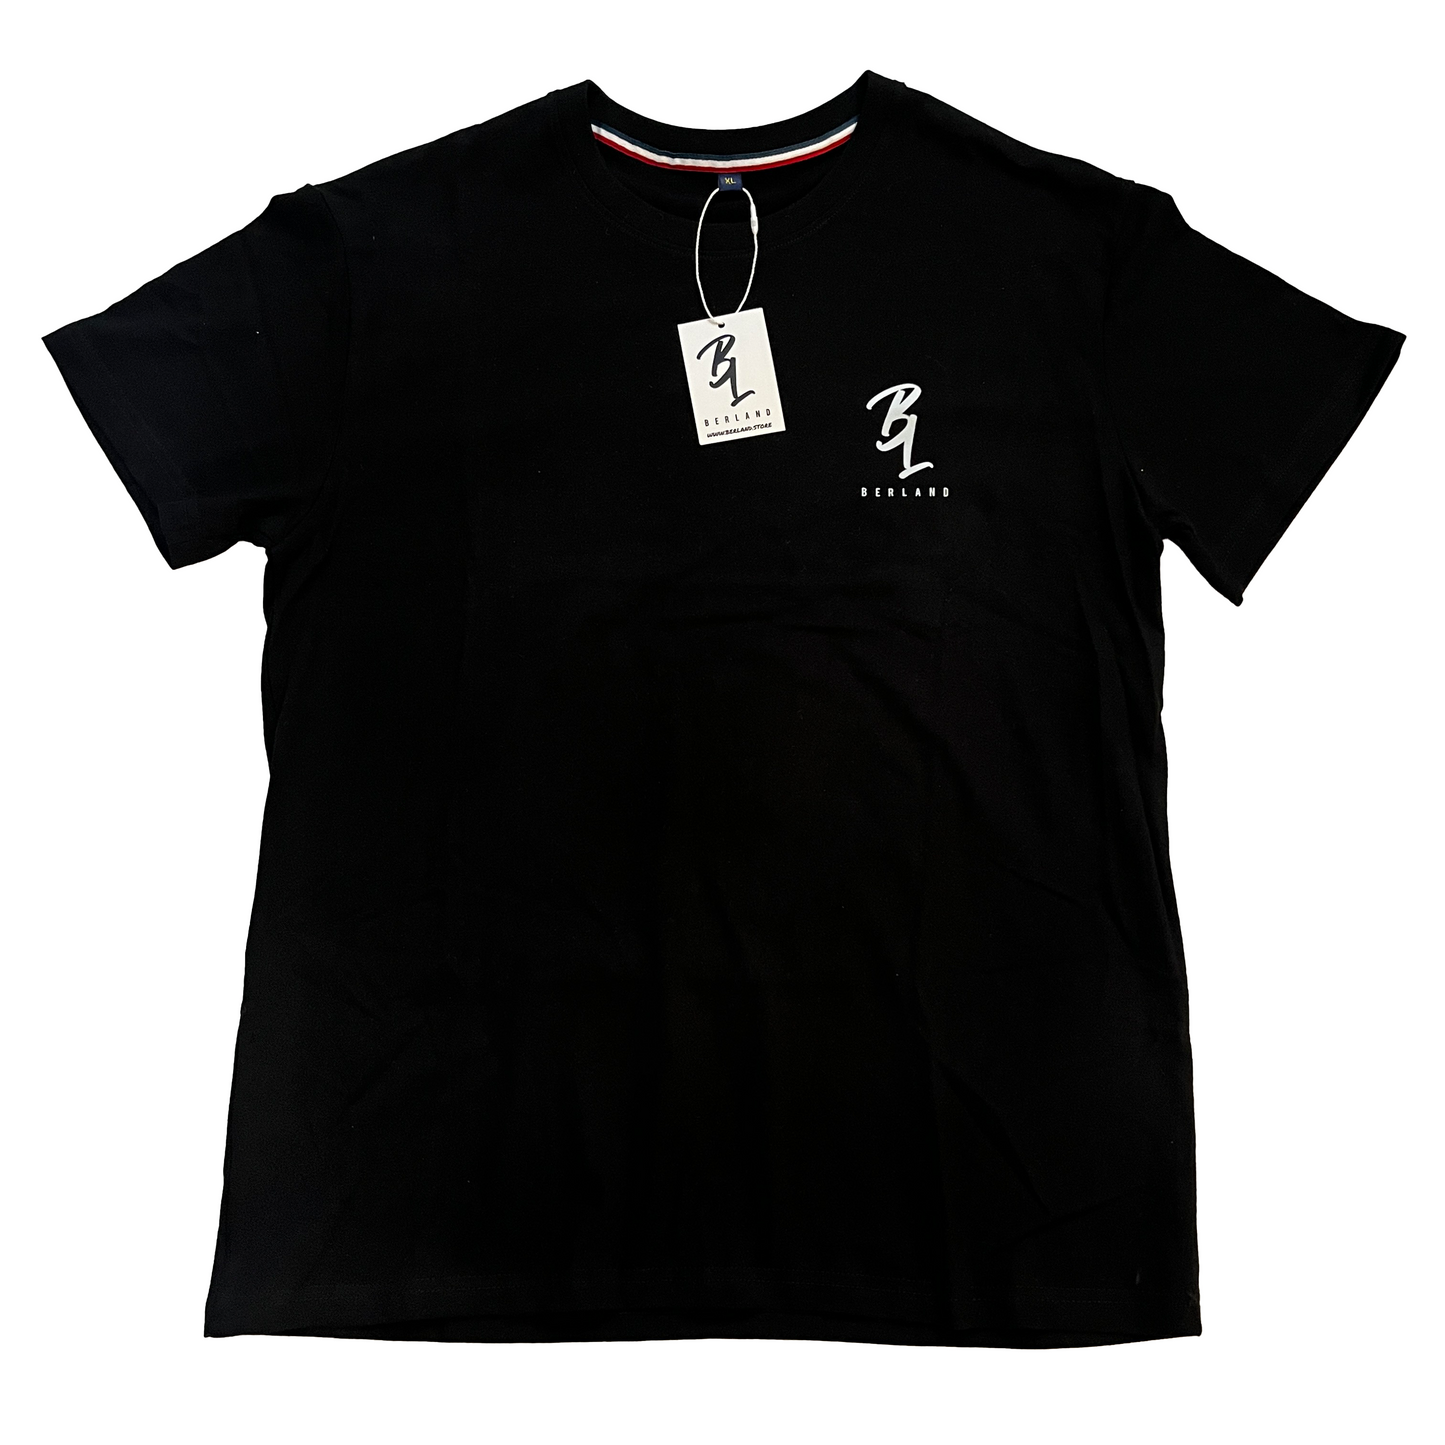 Black Berland Logo T-Shirt